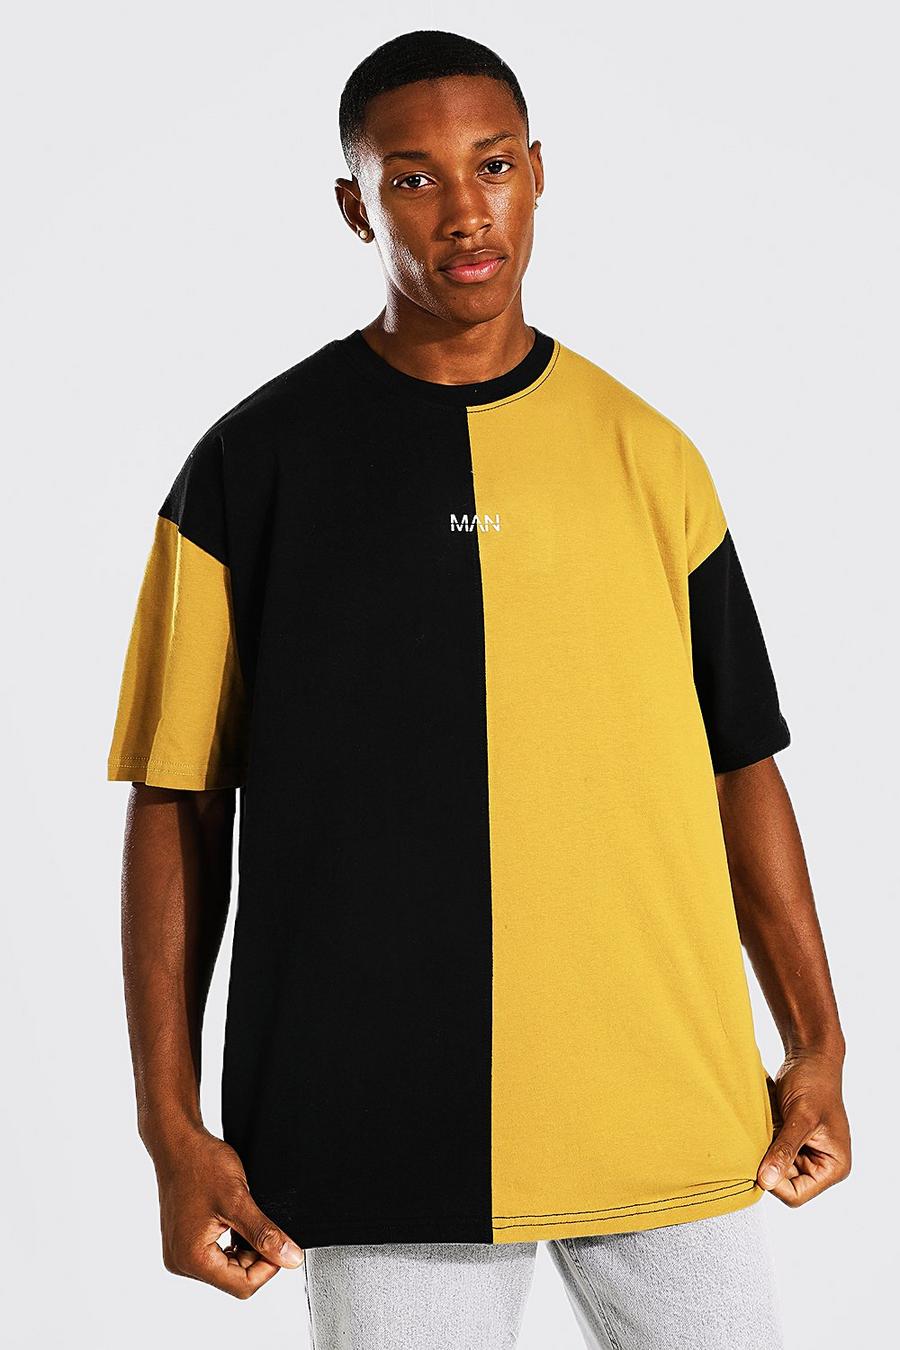 Mustard yellow Oversized Original Man Colour Block T-shirt